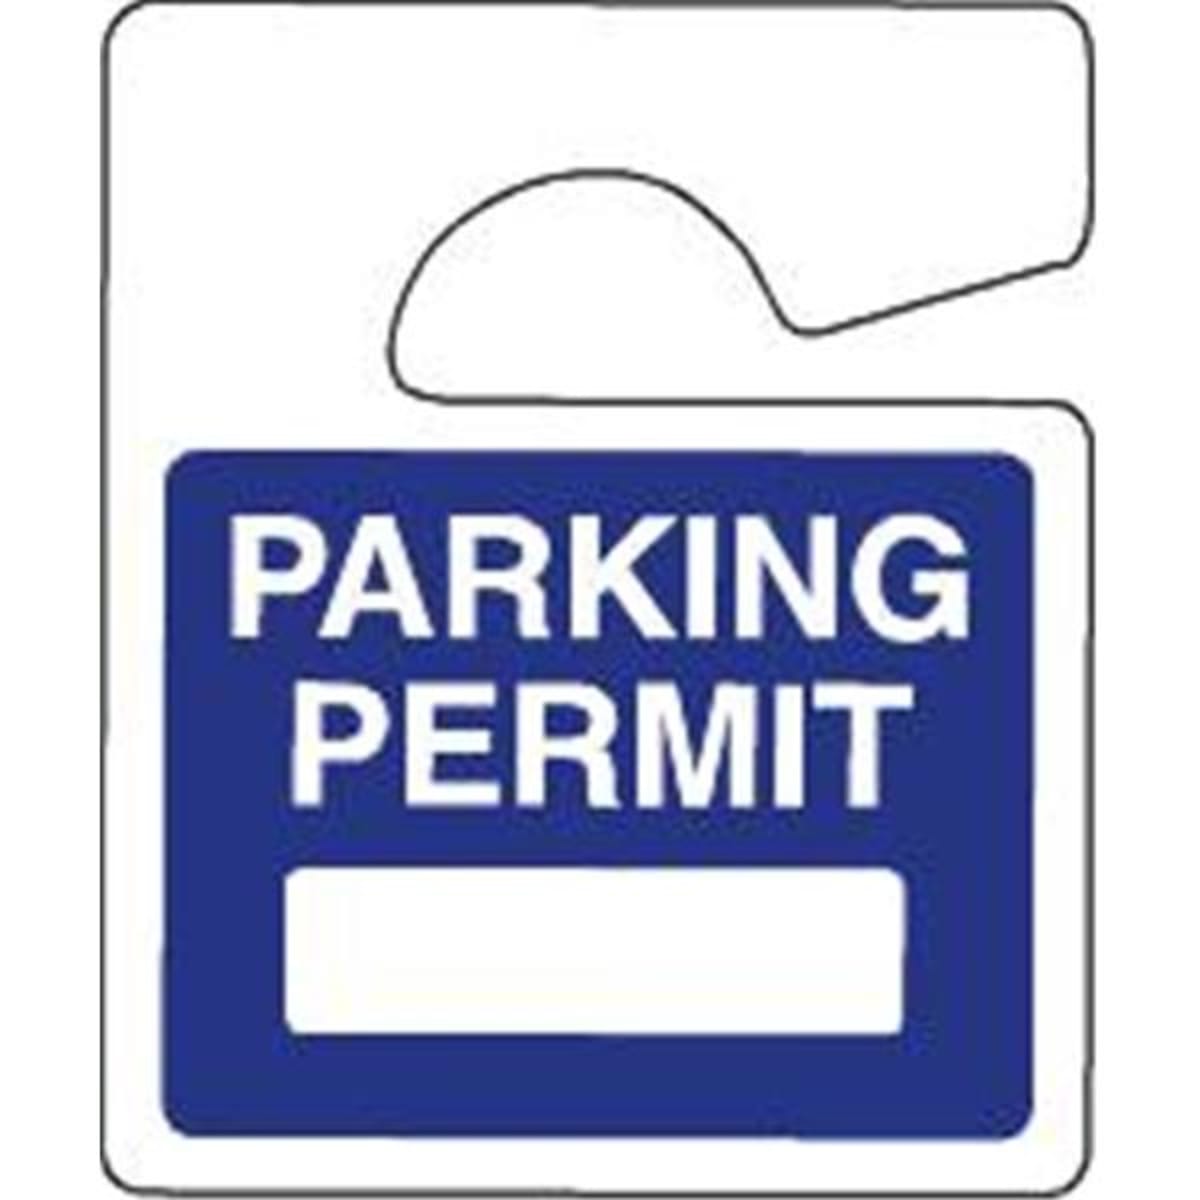 Guest Parking Permit No. Write on - Car Permit Tear-Off Tag